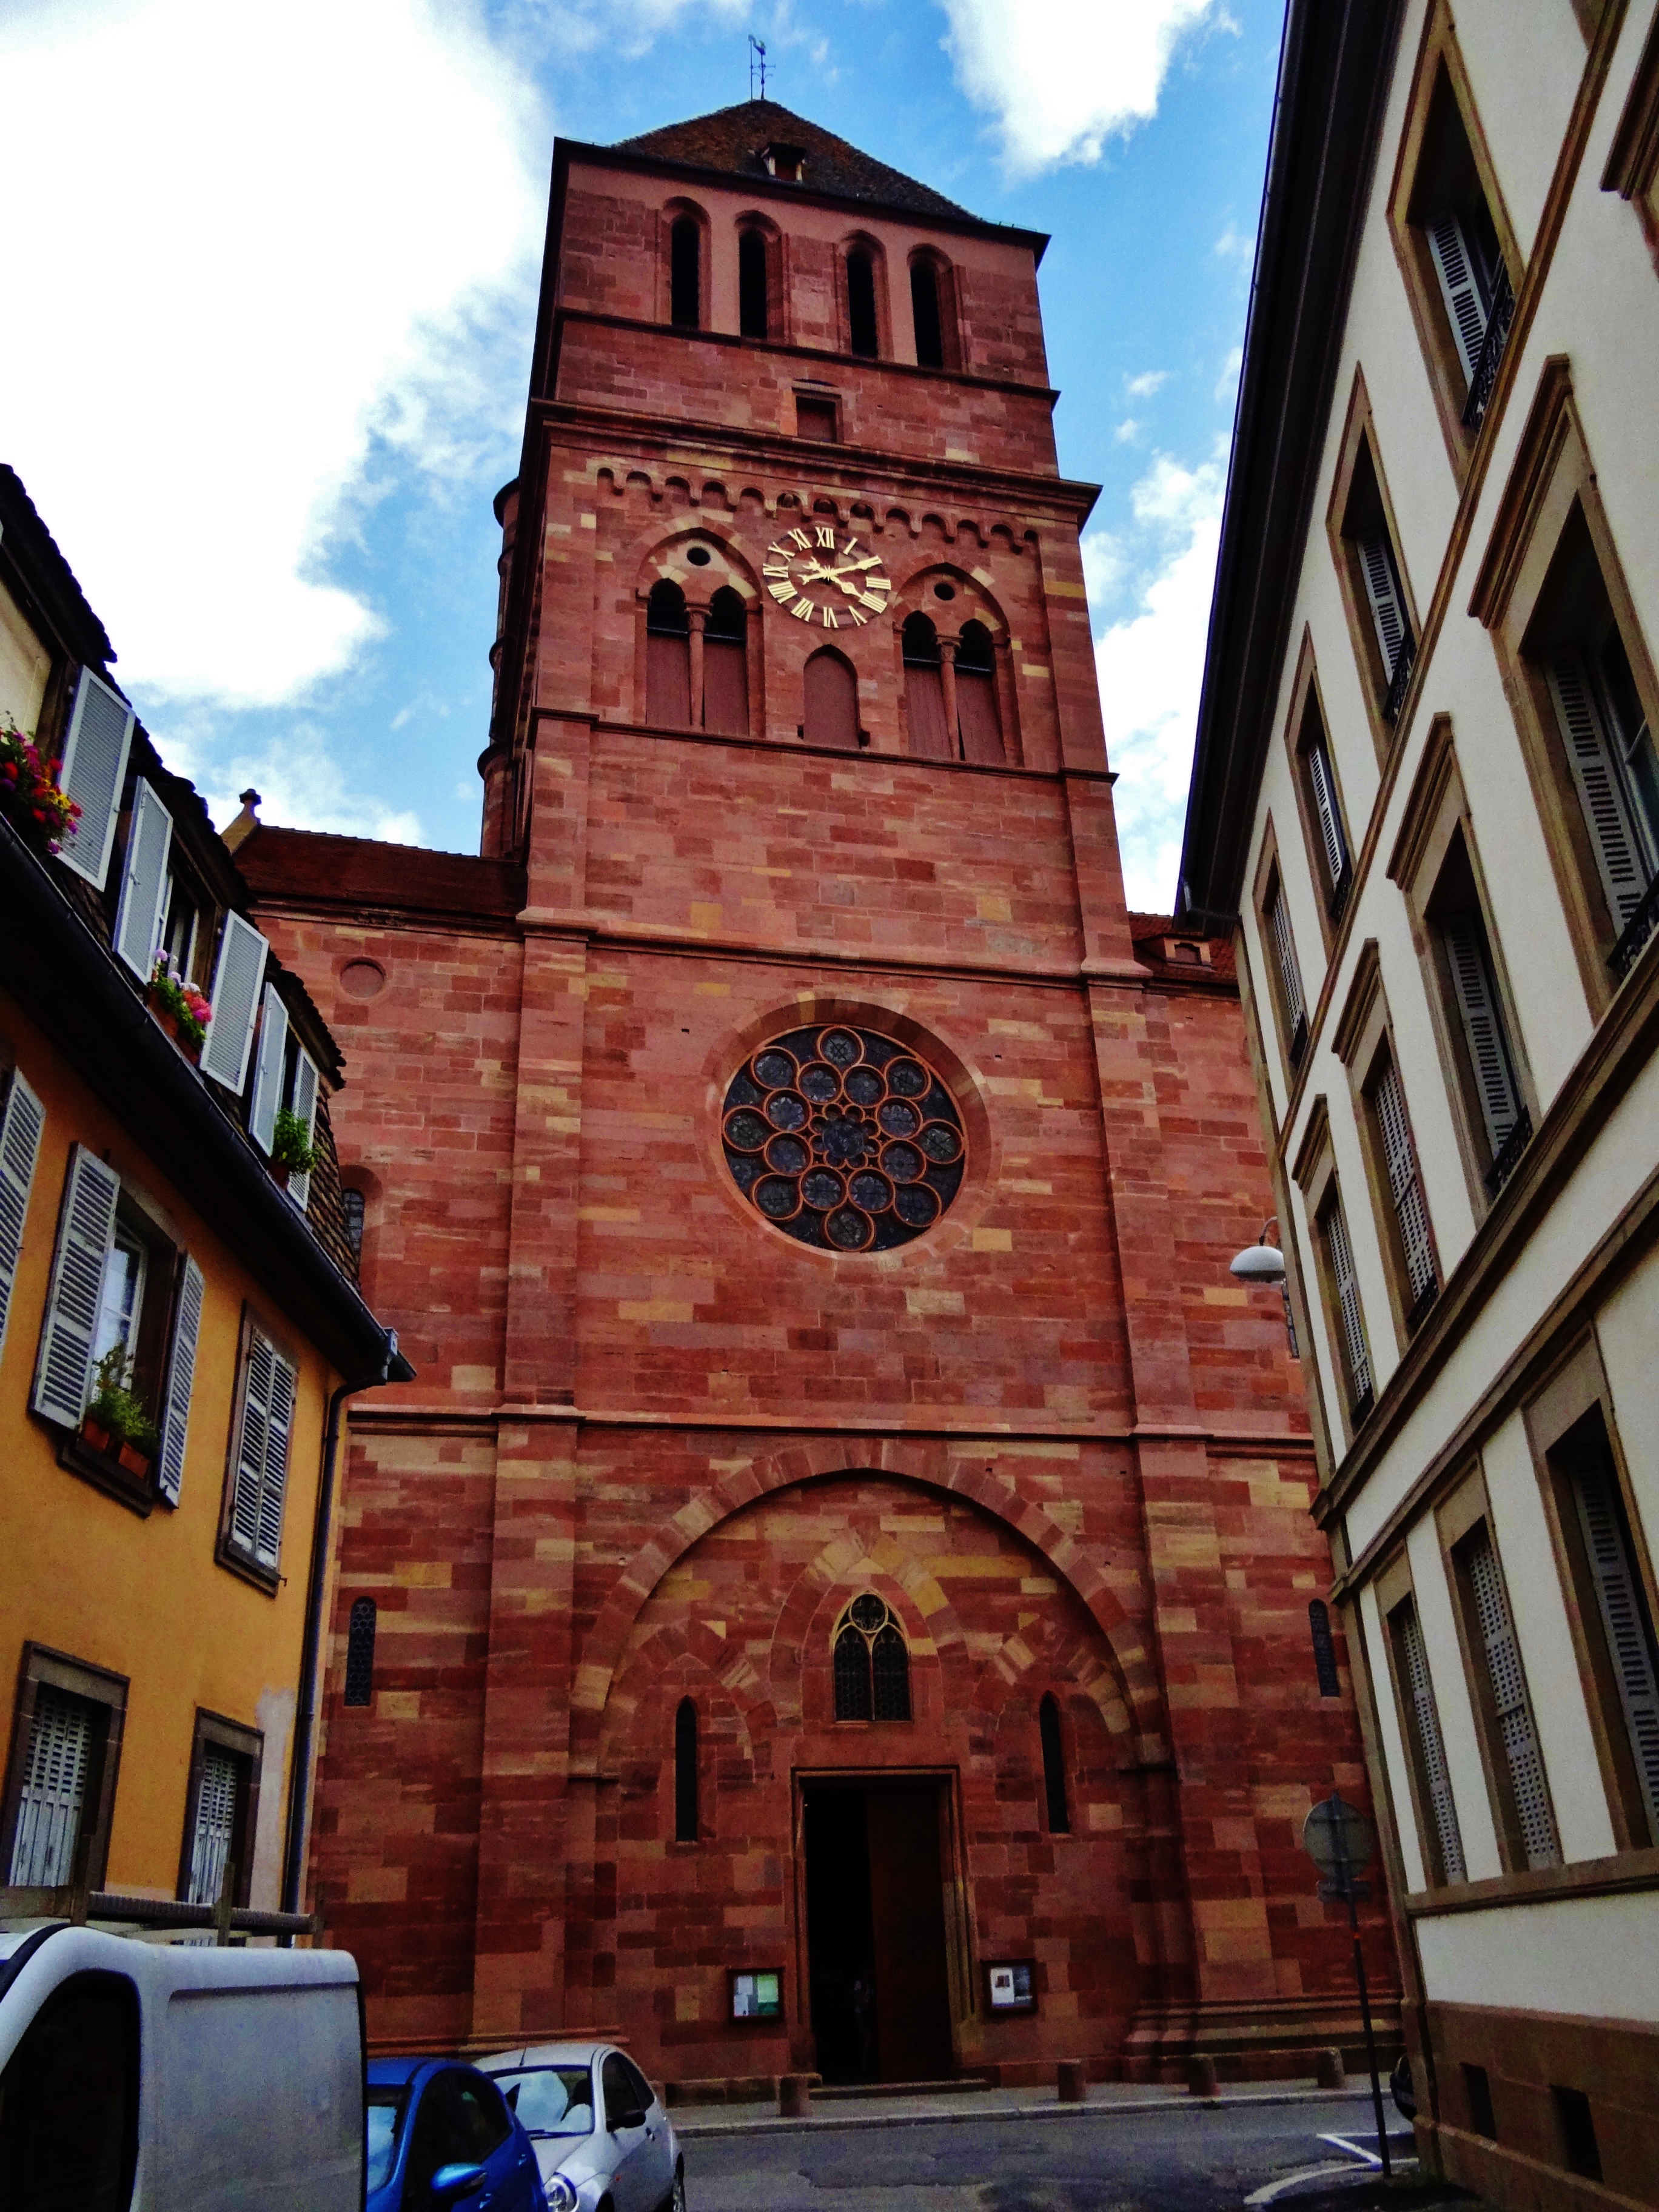 Foto: Église Saint-Thomas de Strasbourg - Strasbourg (Alsace), Francia